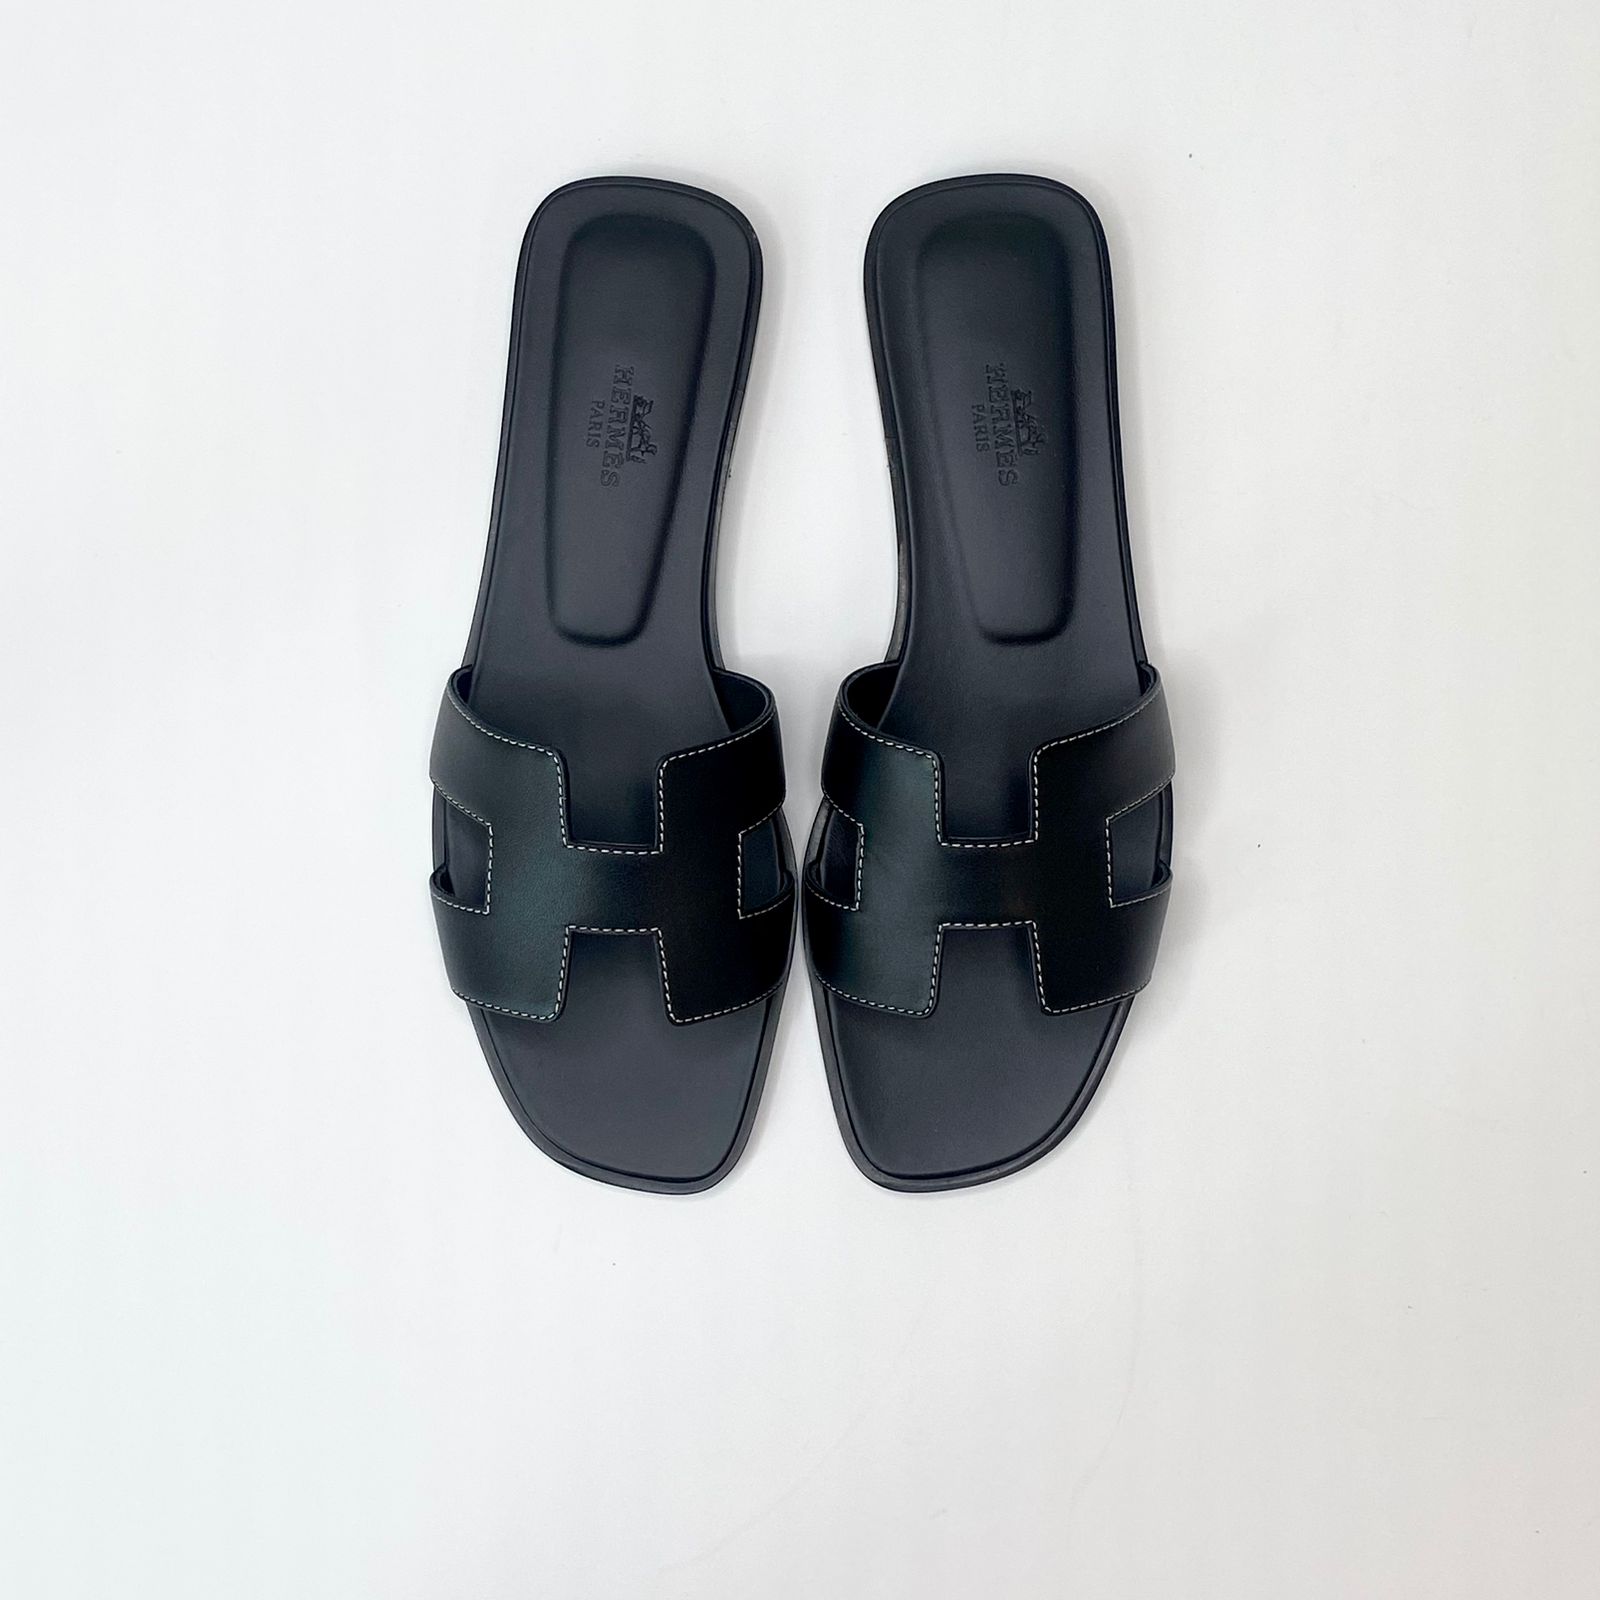 Hermes Oran Black sandals Size 37.5 EU - The Luxury Flavor